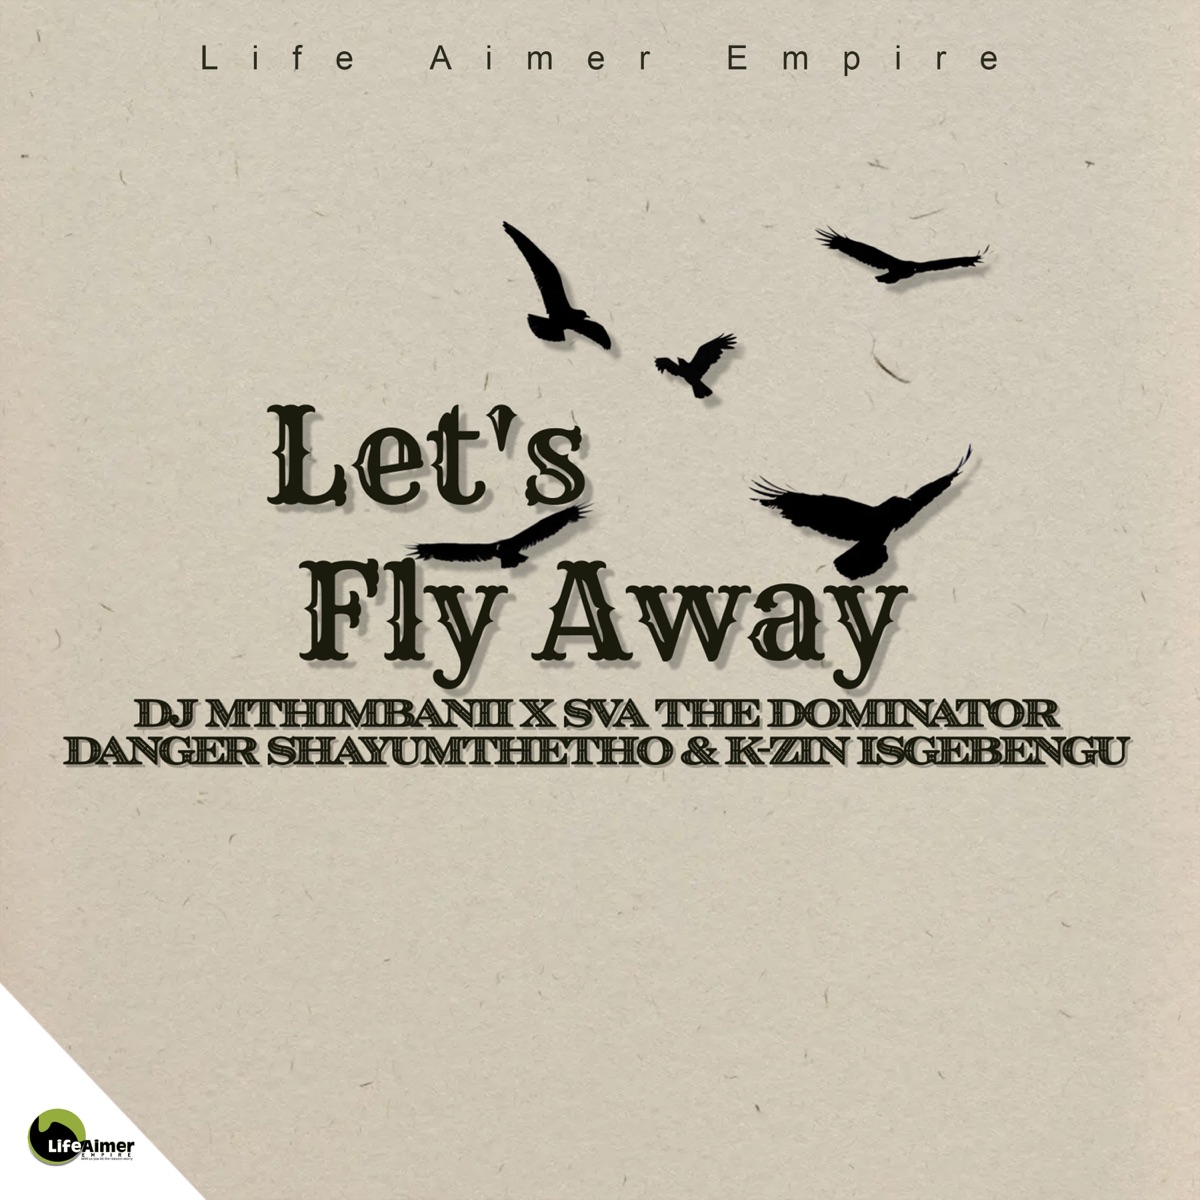 MP3: Sva The Dominator Ft. Dj Mthimbanii, Danger Shayumthetho & K-zin Isgebengu – Let’s Fly Away (Project 72)